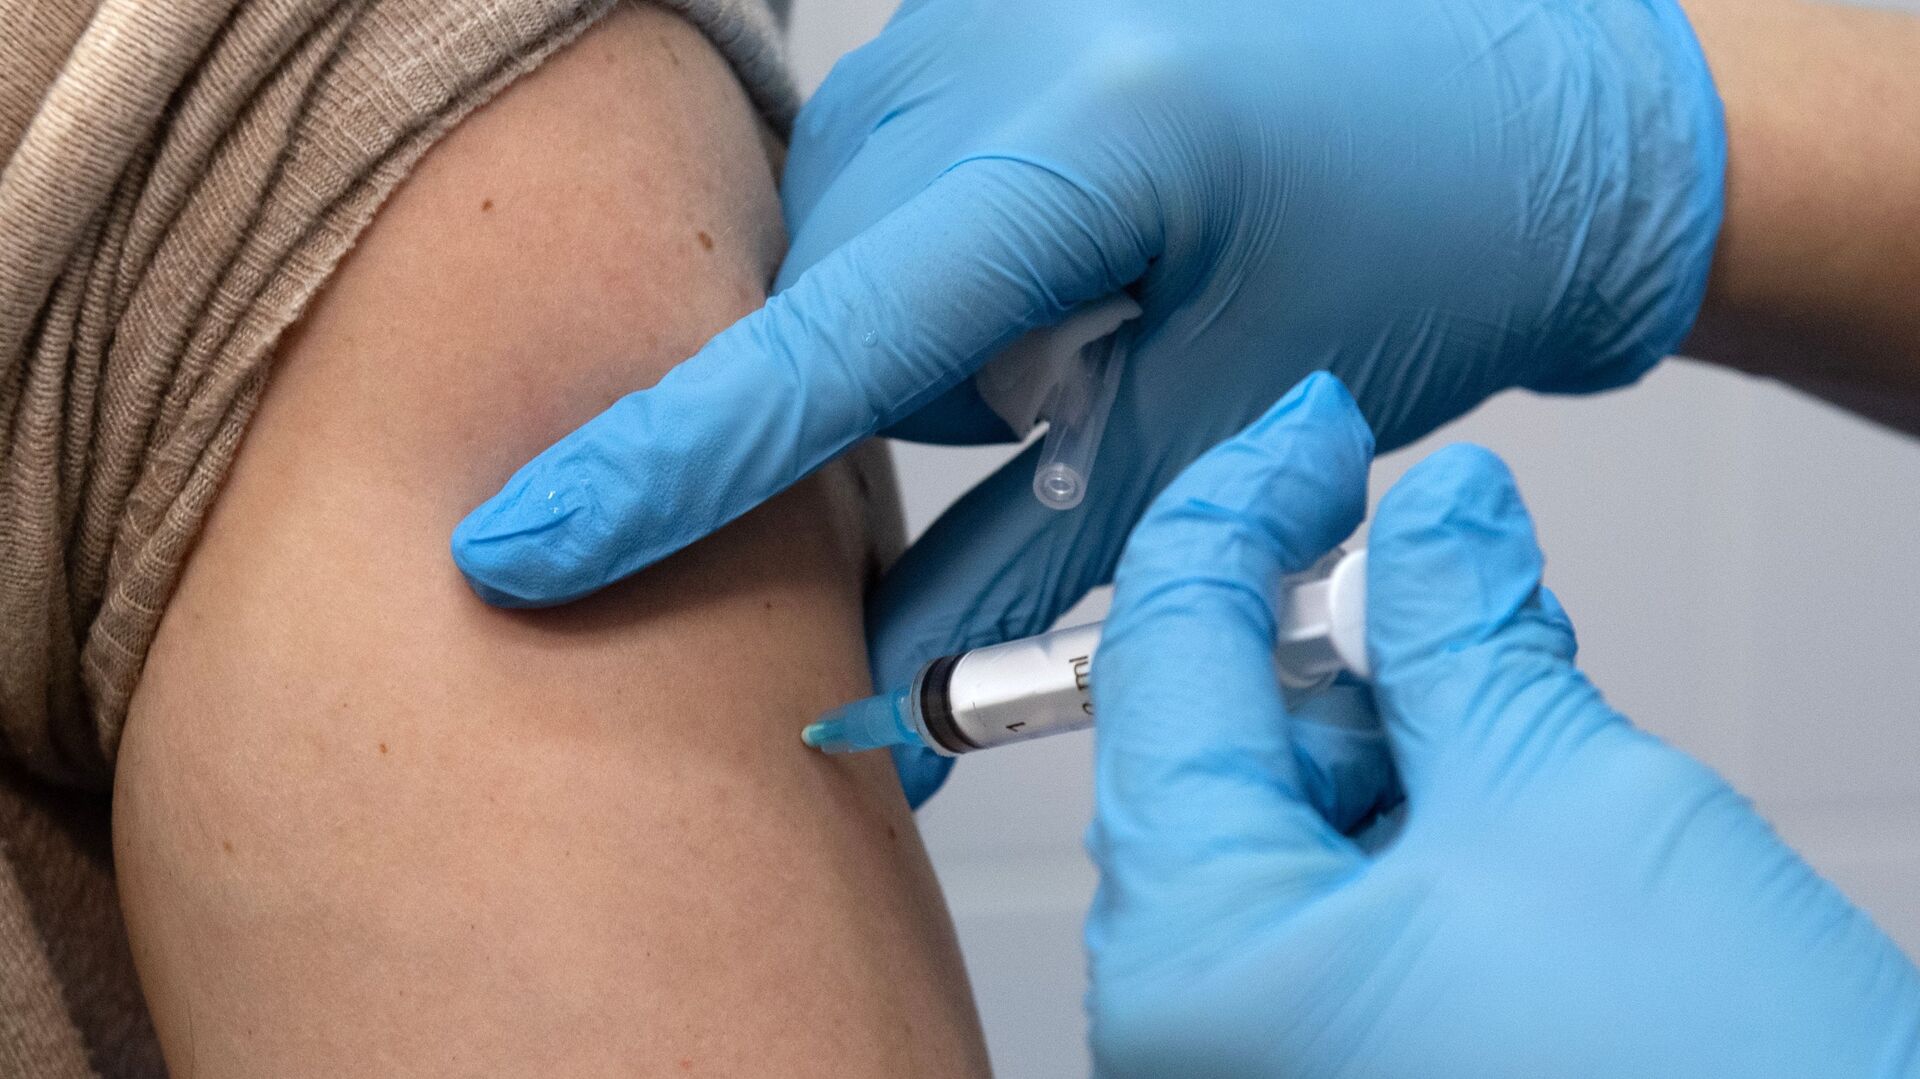 تطعيم أهالي موسكو بلقاح ضد فيروس كورونا (كوفيد - 19)، روسيا 5 ديسمبر 2020 - سبوتنيك عربي, 1920, 06.07.2021